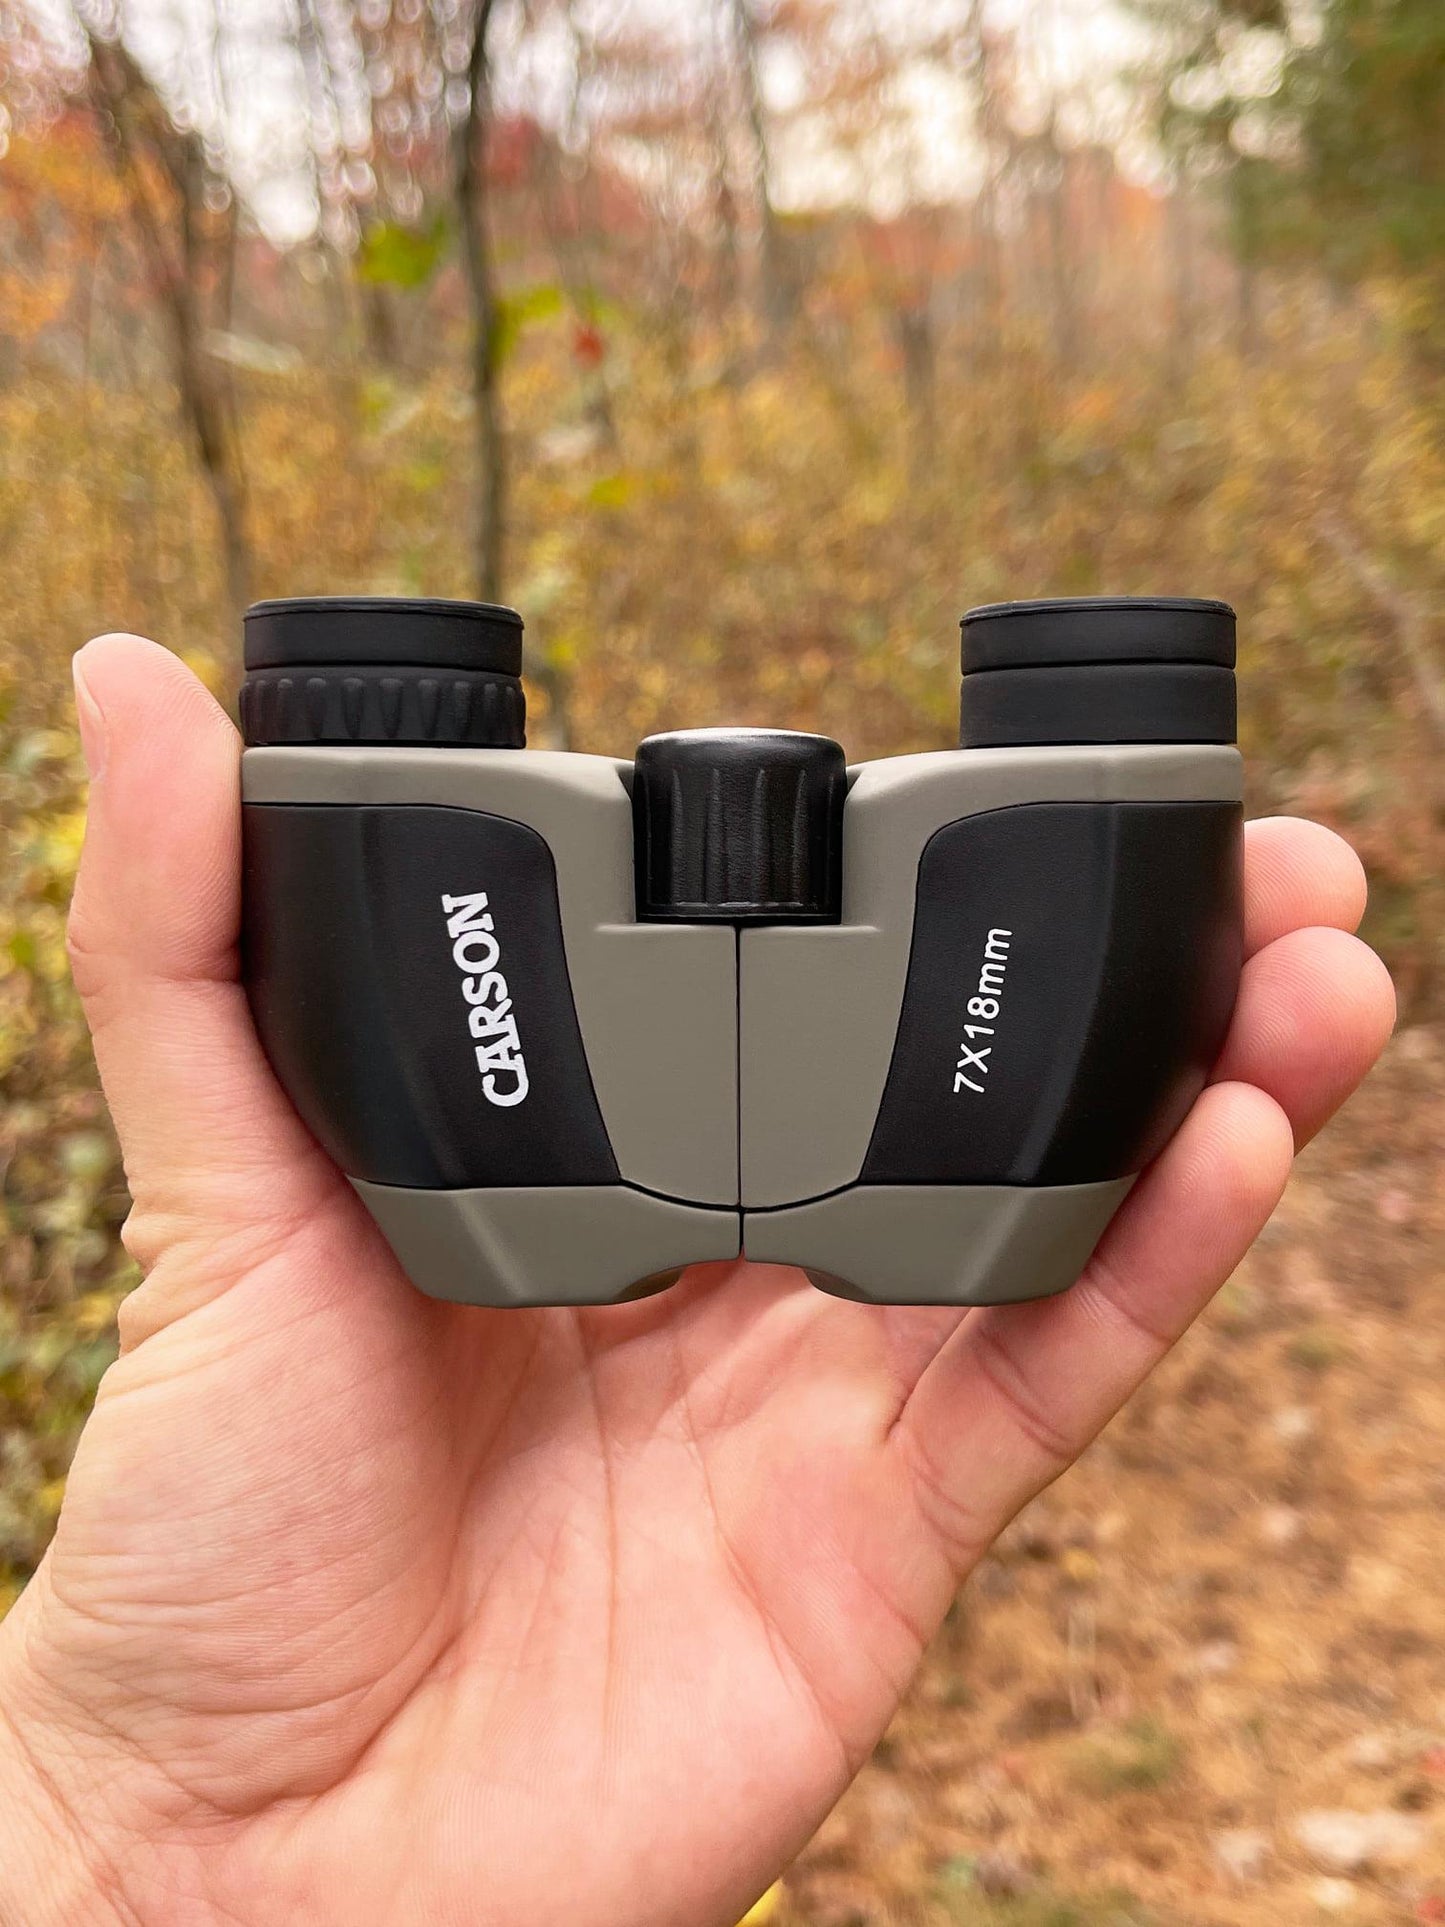 Carson MiniScout™ 7x18mm Porro Prism Ultra-Compact Lightweight Binoculars JD-718